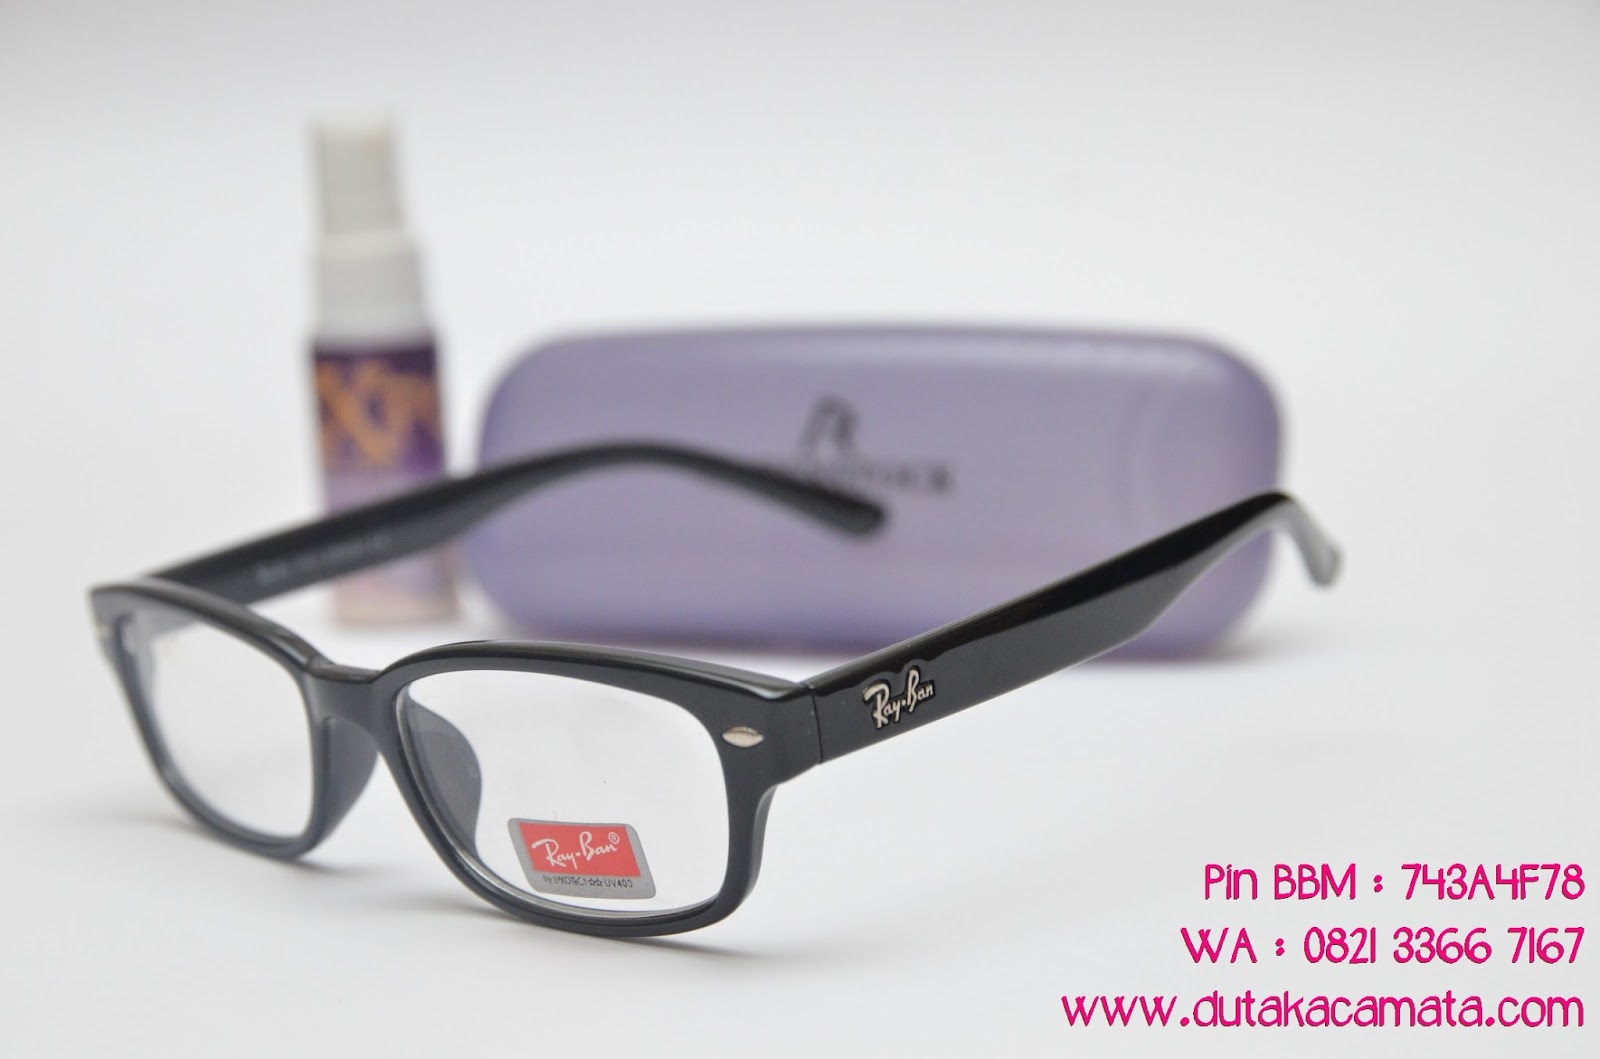 Rayban 5 Toko jual frame kacamata  minus  murah online dari 